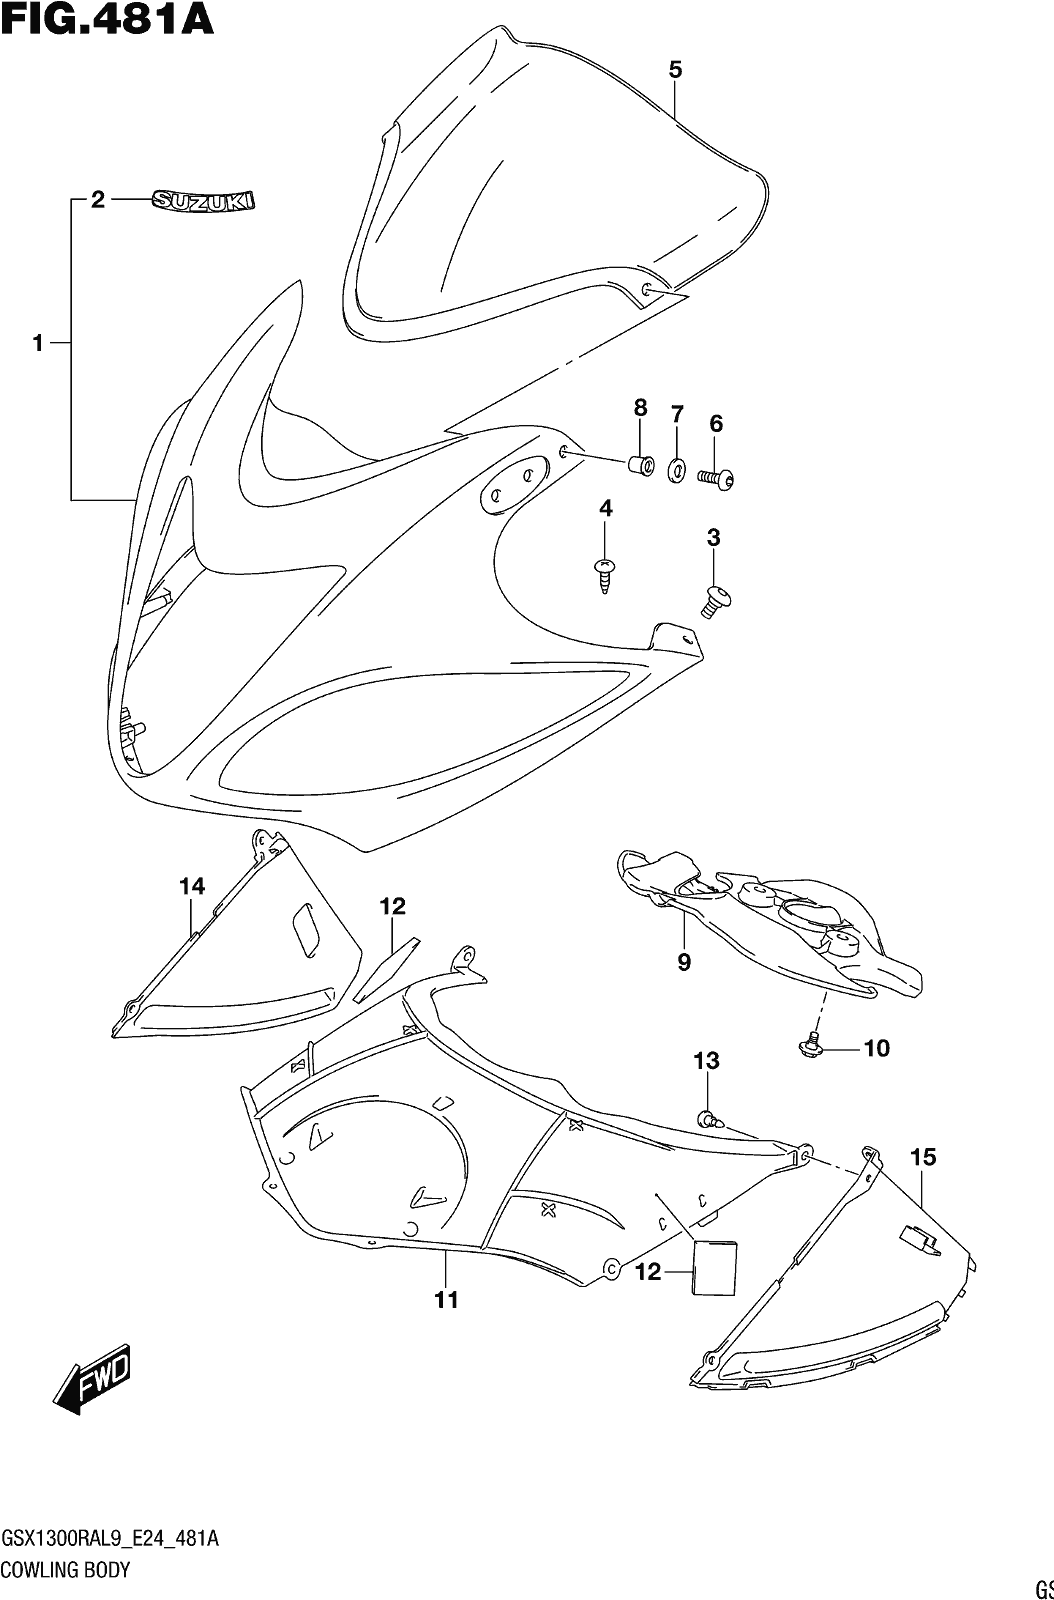 Fig.481a Cowling Body